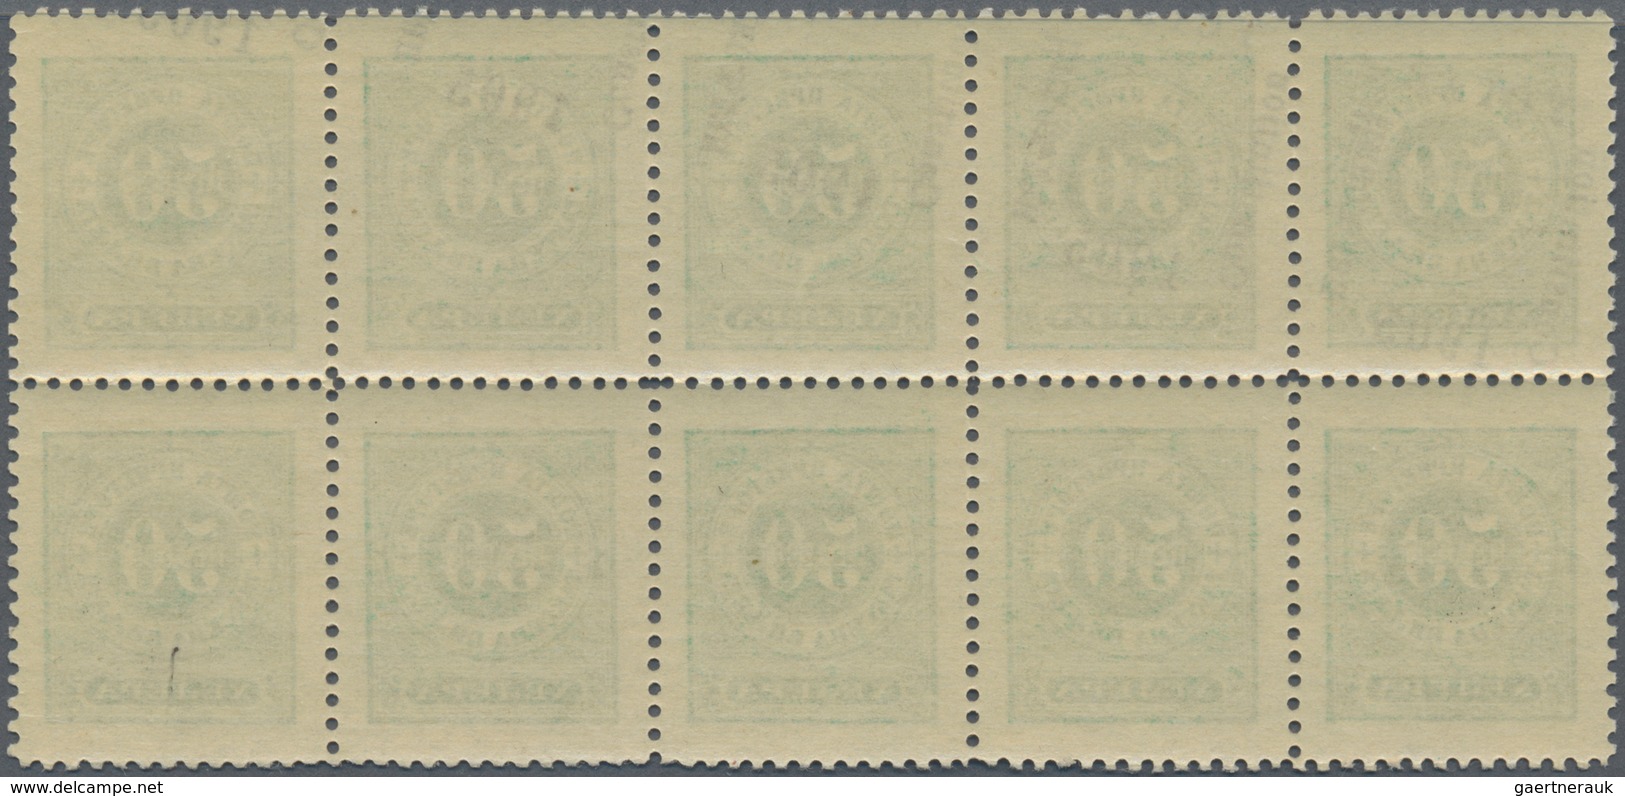 Montenegro - Portomarken: 1905, 50 H Emerald 'constitution', Block Of 10, Upper Row Of 5 Stamps With - Montenegro